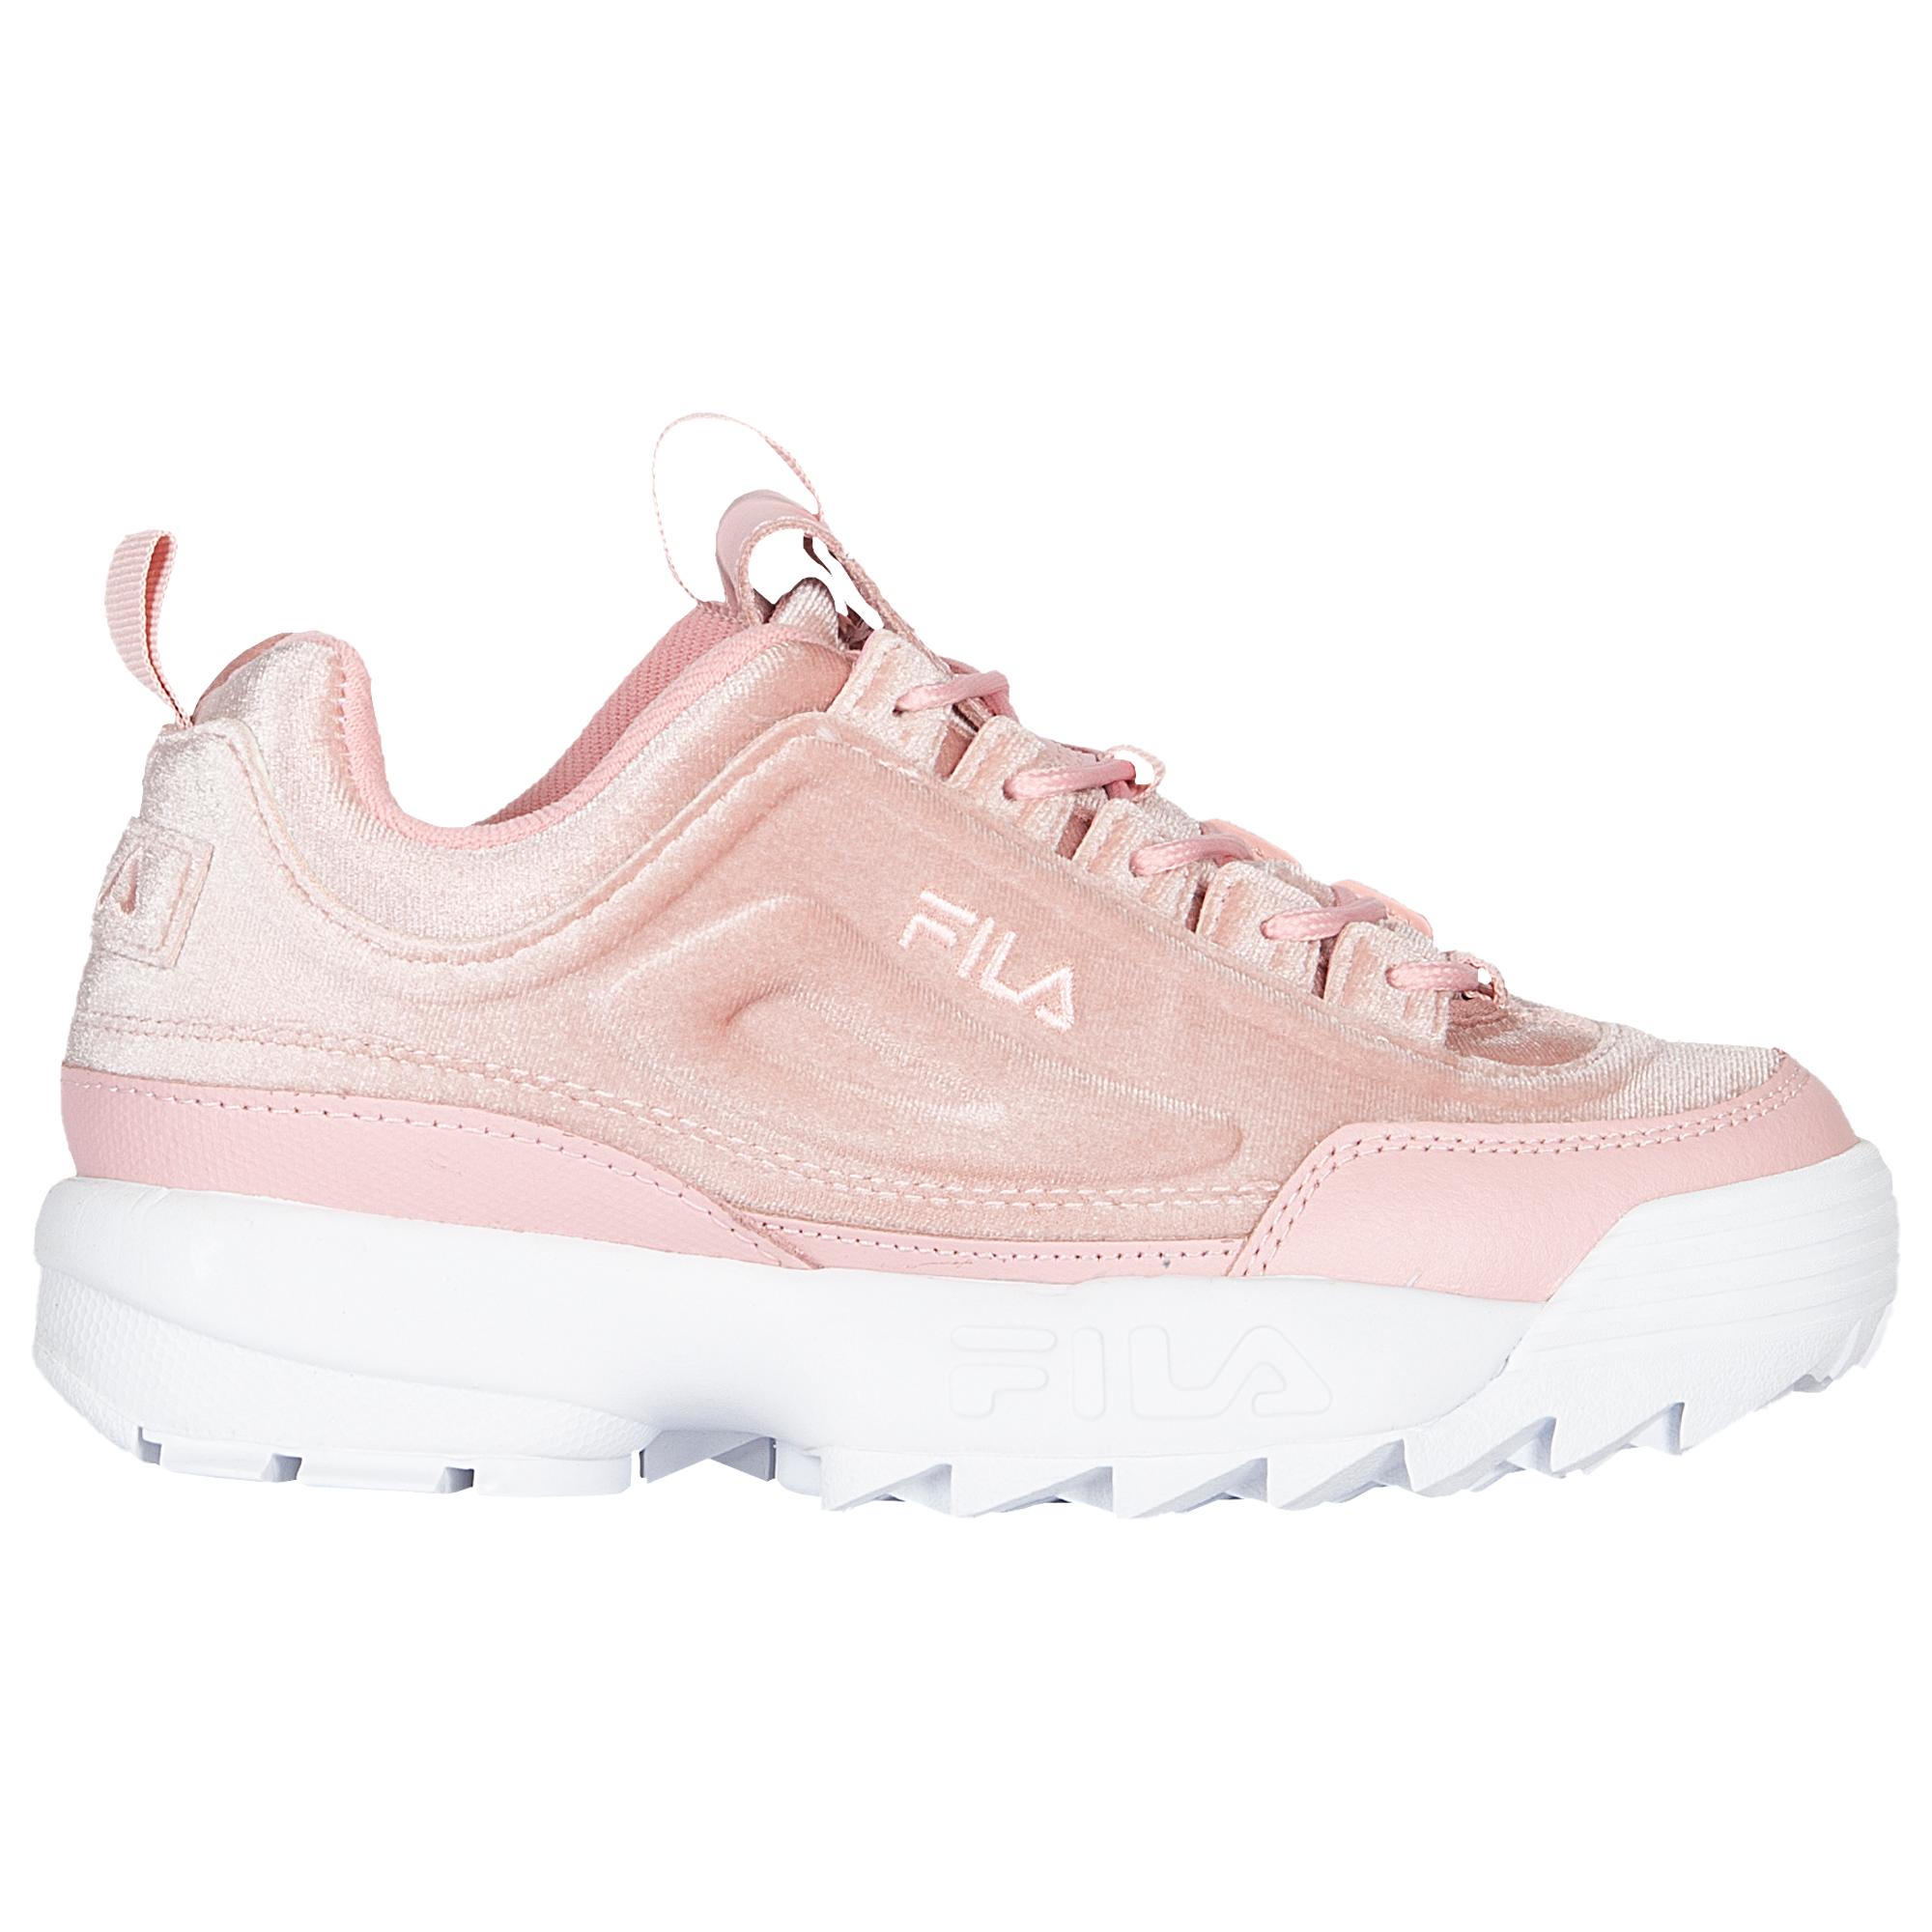 Fila Disruptor Velvet Training Shoes in Pink - Lyst